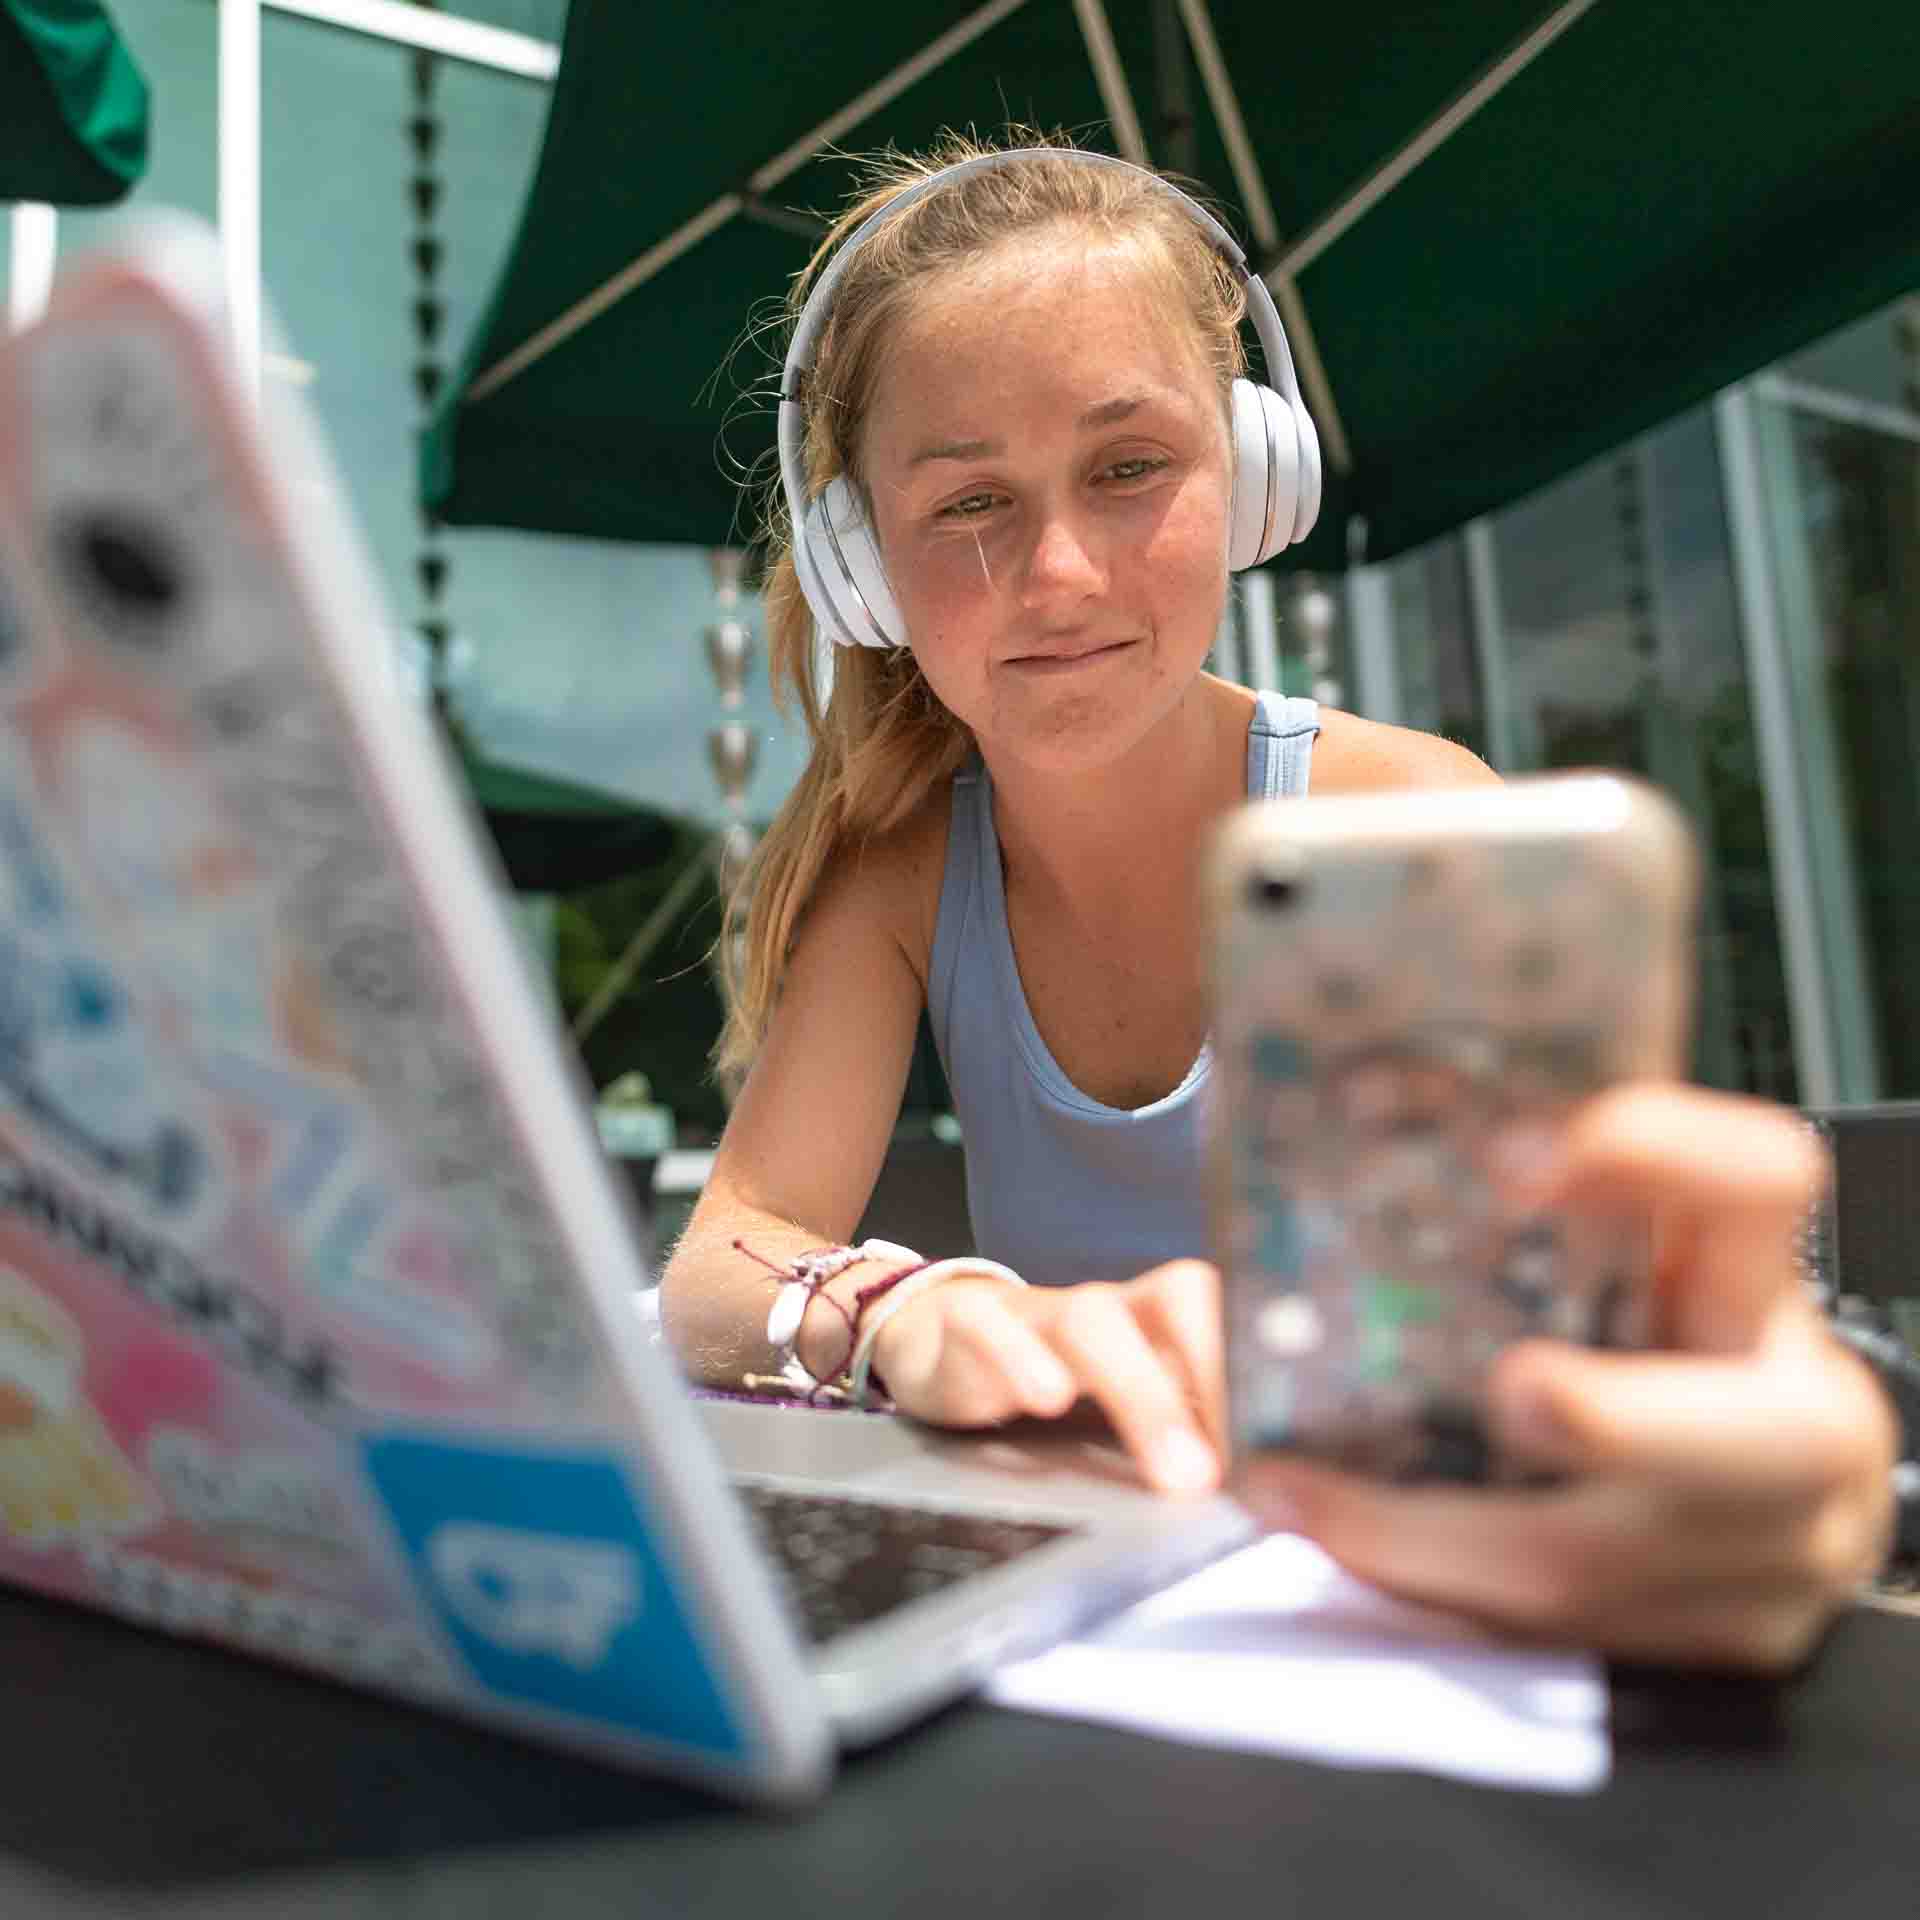 Girl using phone, headphones and laptop.